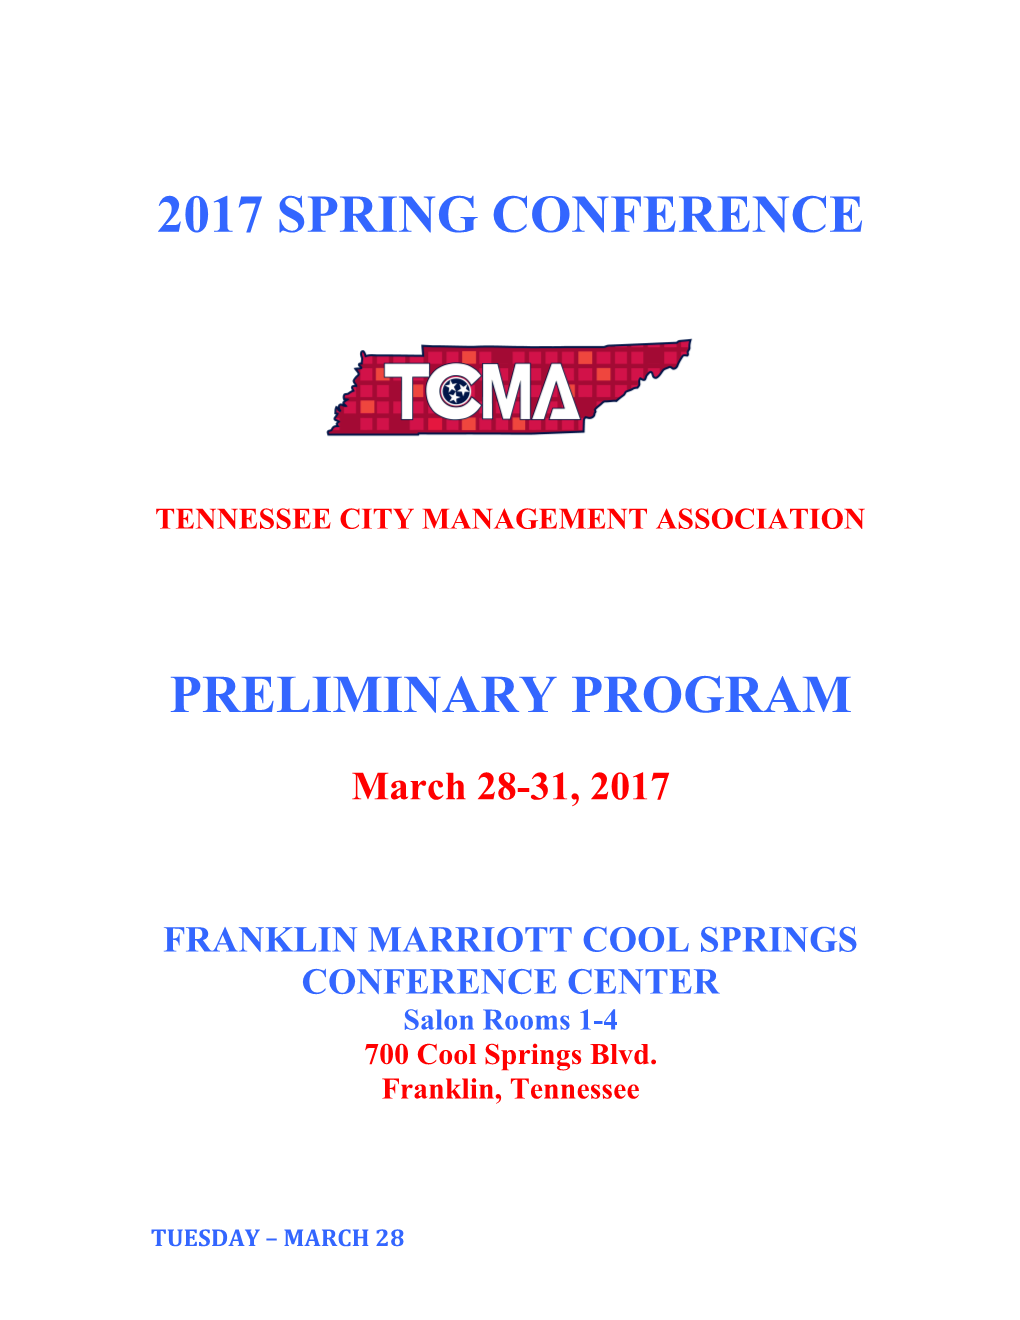 Tennessee City Management Association